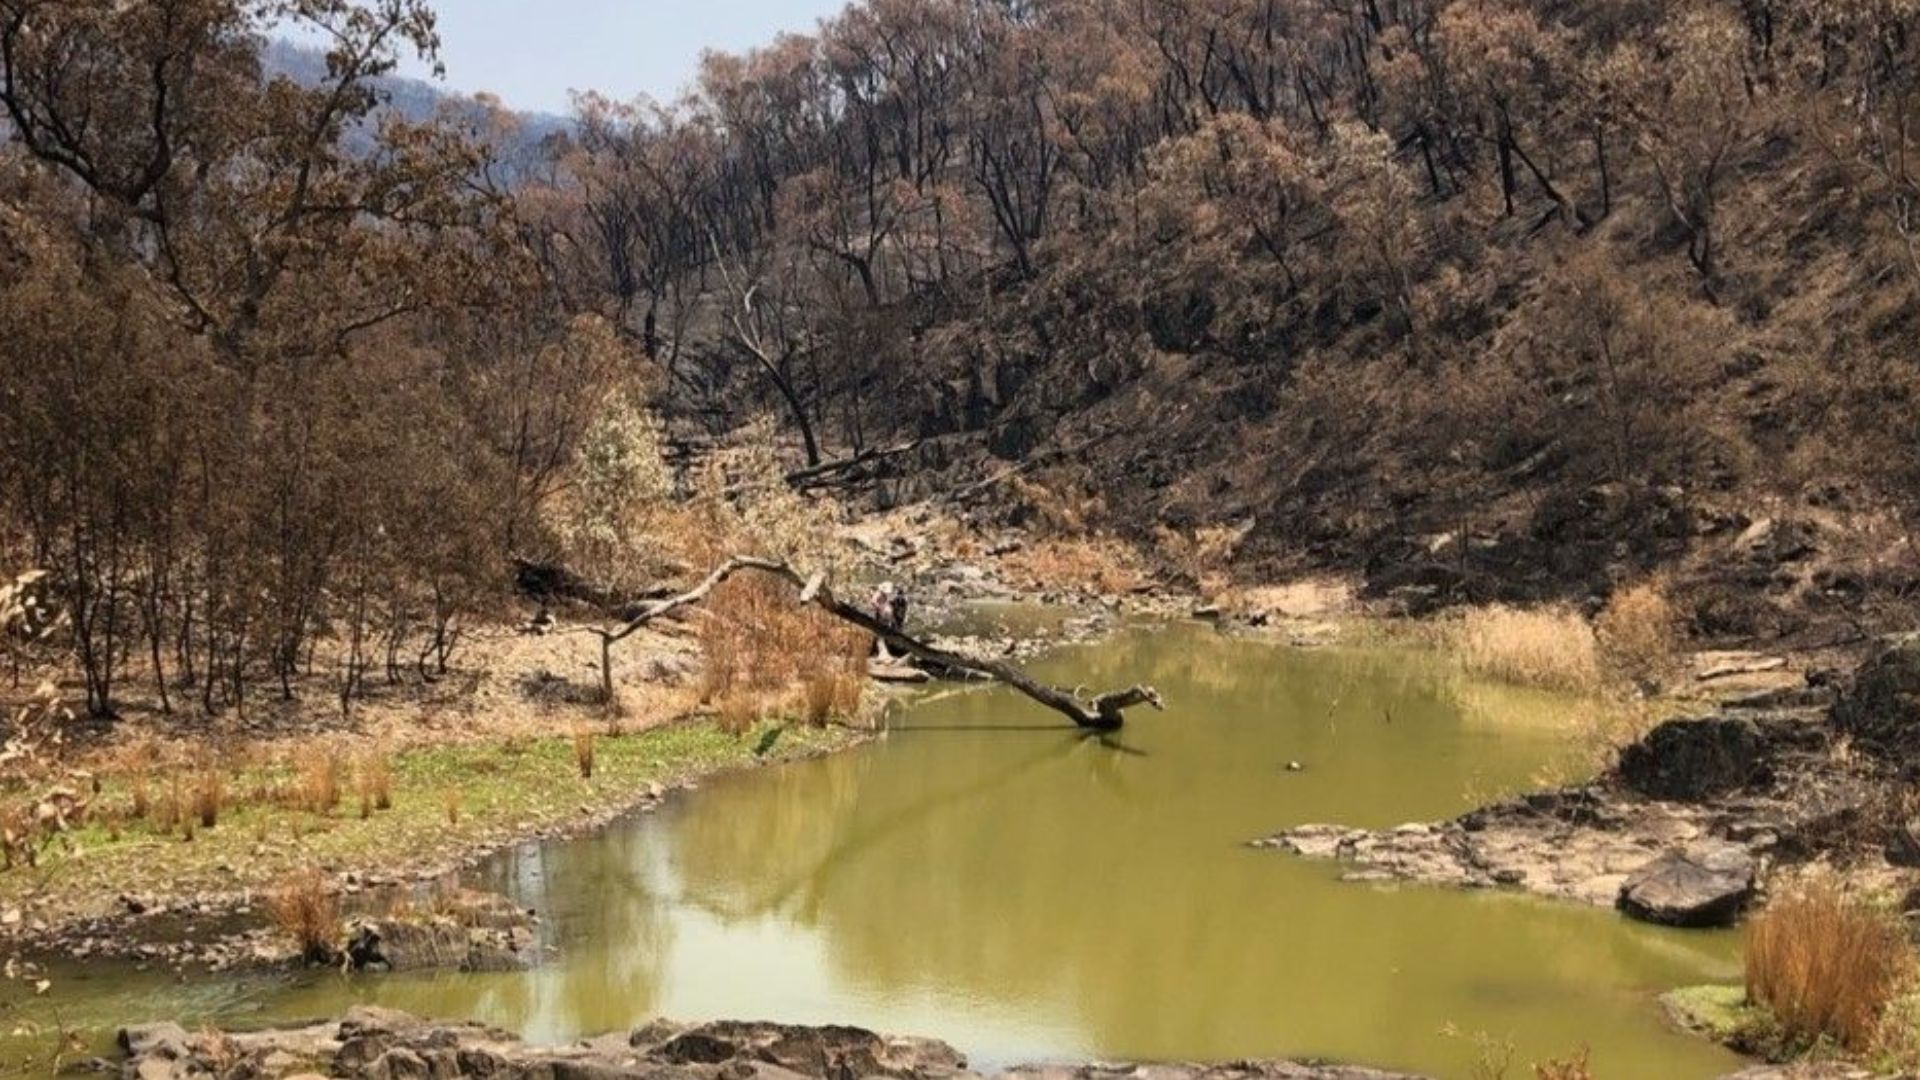 Bushfires followed by rain: a catastrophic combination for Australia’s Macquarie perch